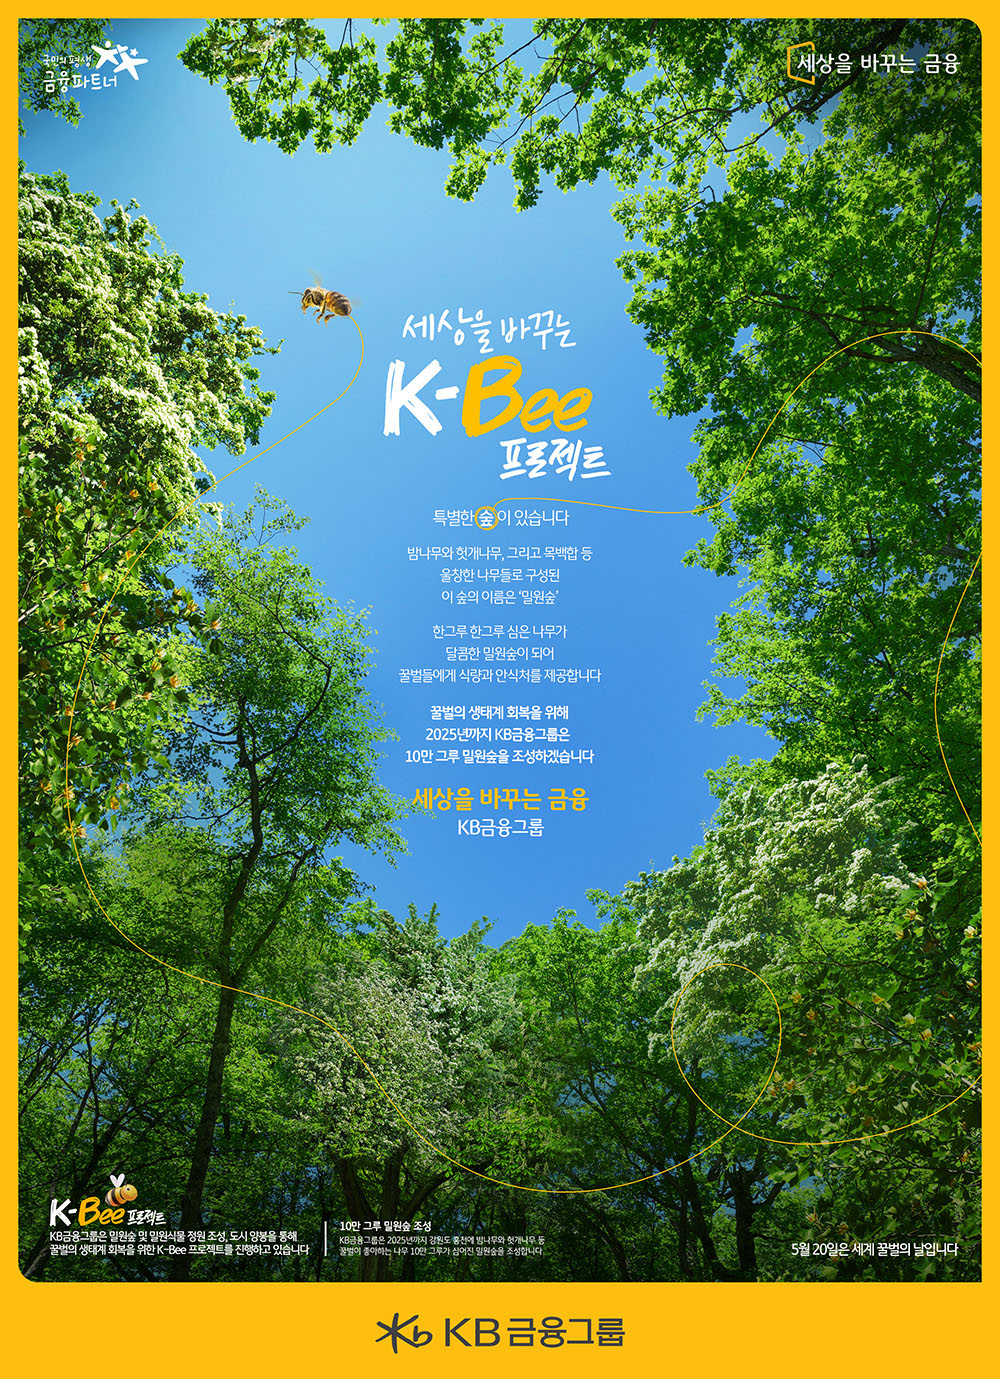 K-Bee 프로젝트 포스터 이미지